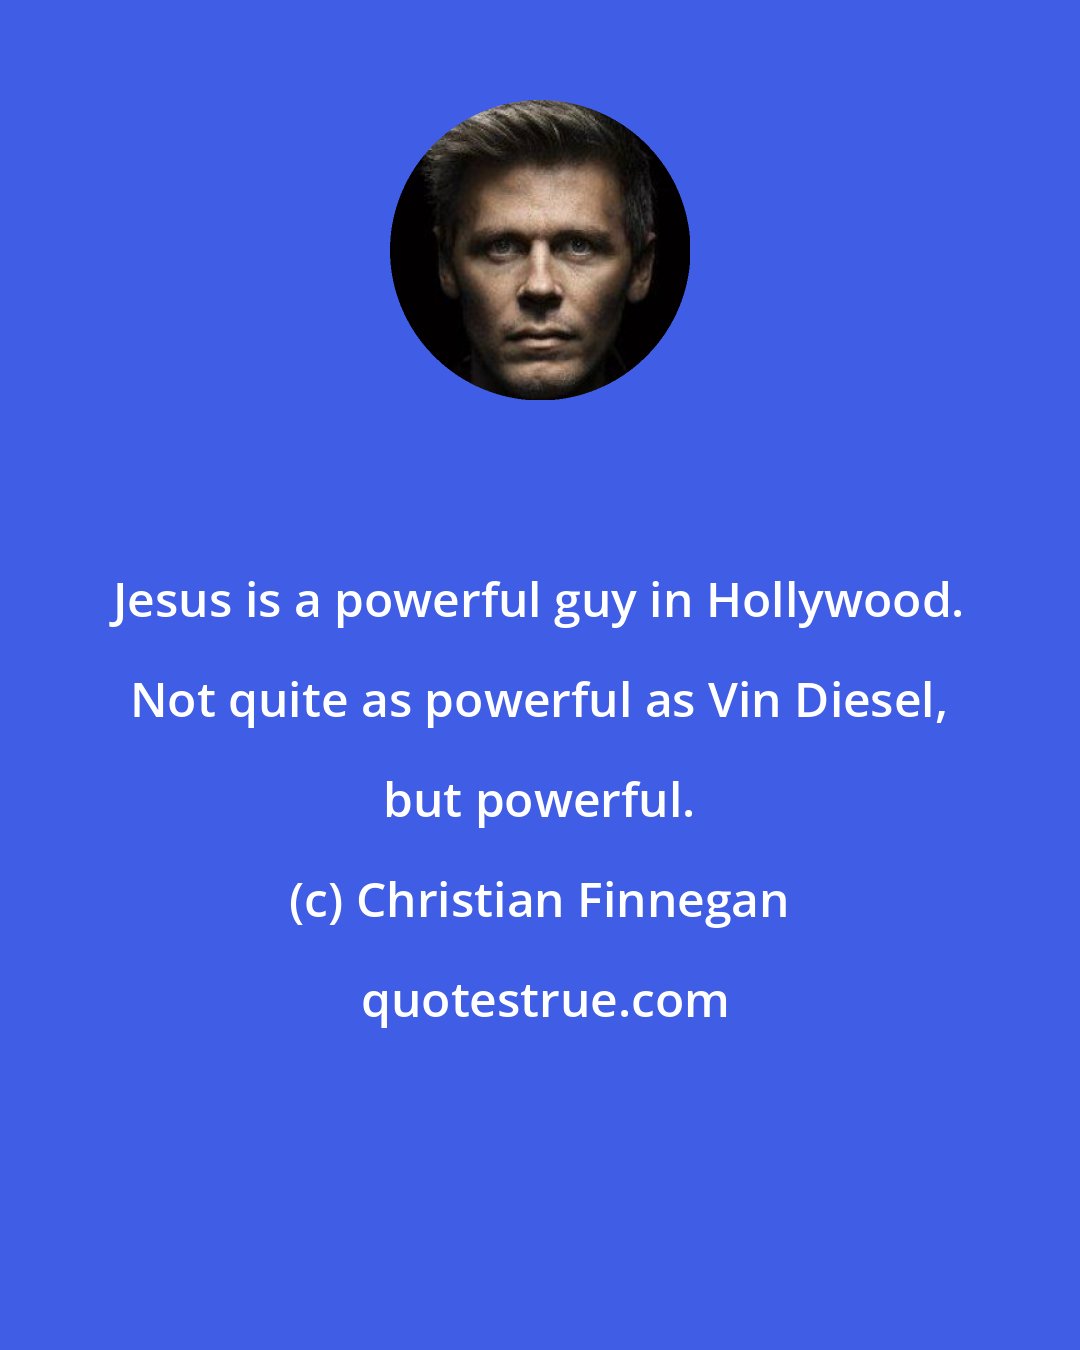 Christian Finnegan: Jesus is a powerful guy in Hollywood. Not quite as powerful as Vin Diesel, but powerful.